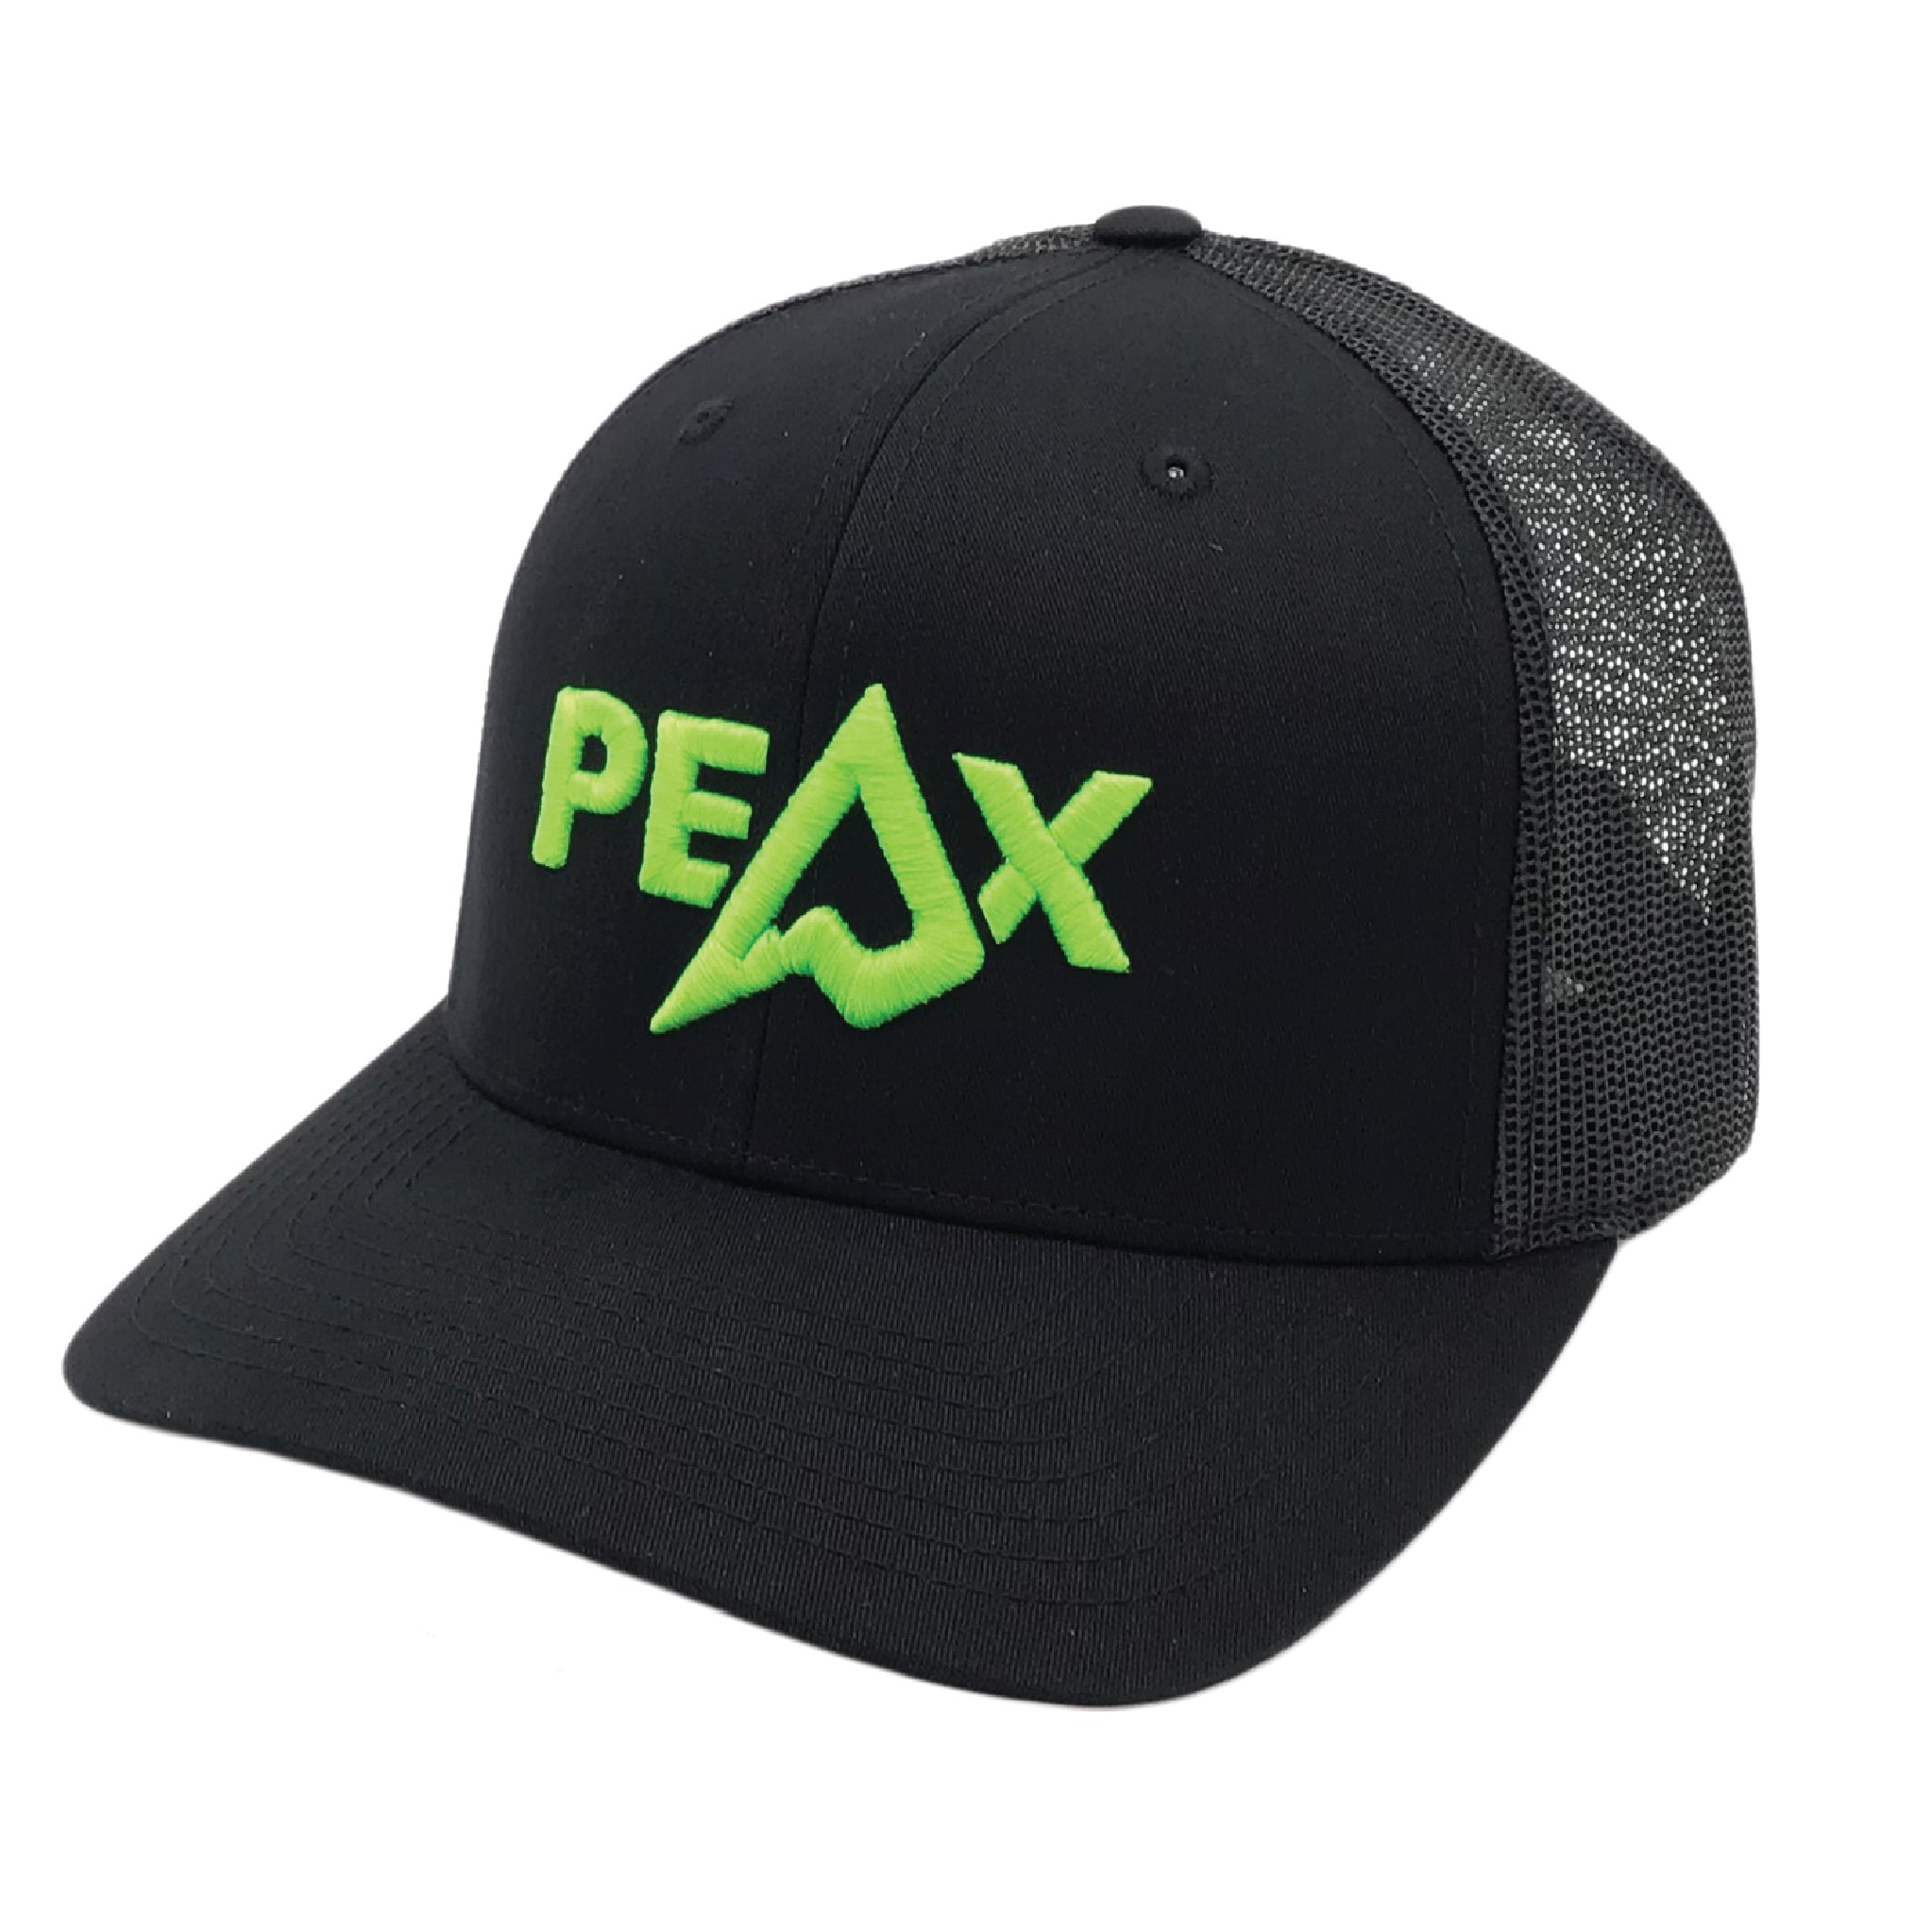 PEAX PINNACLE HAT (Black/Green)